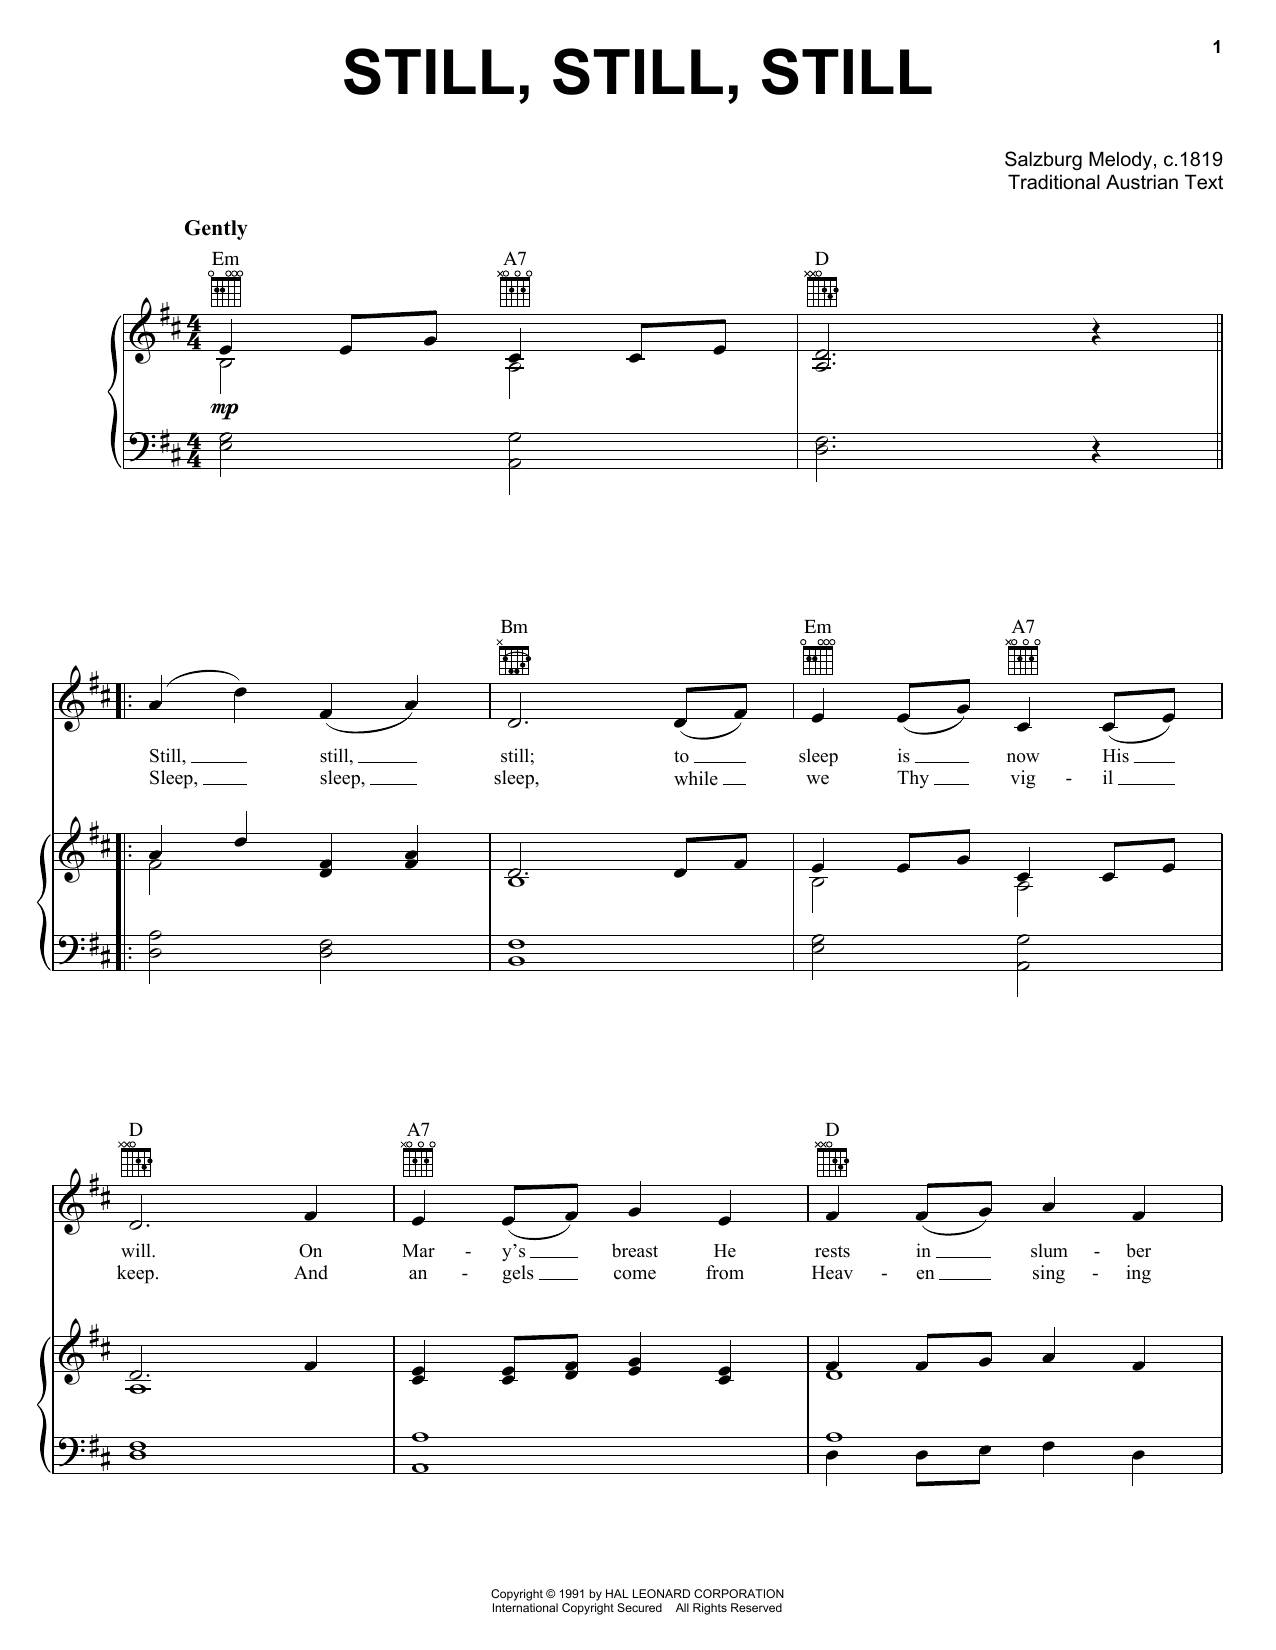 Traditional Still, Still, Still Sheet Music Notes & Chords for Easy Piano - Download or Print PDF